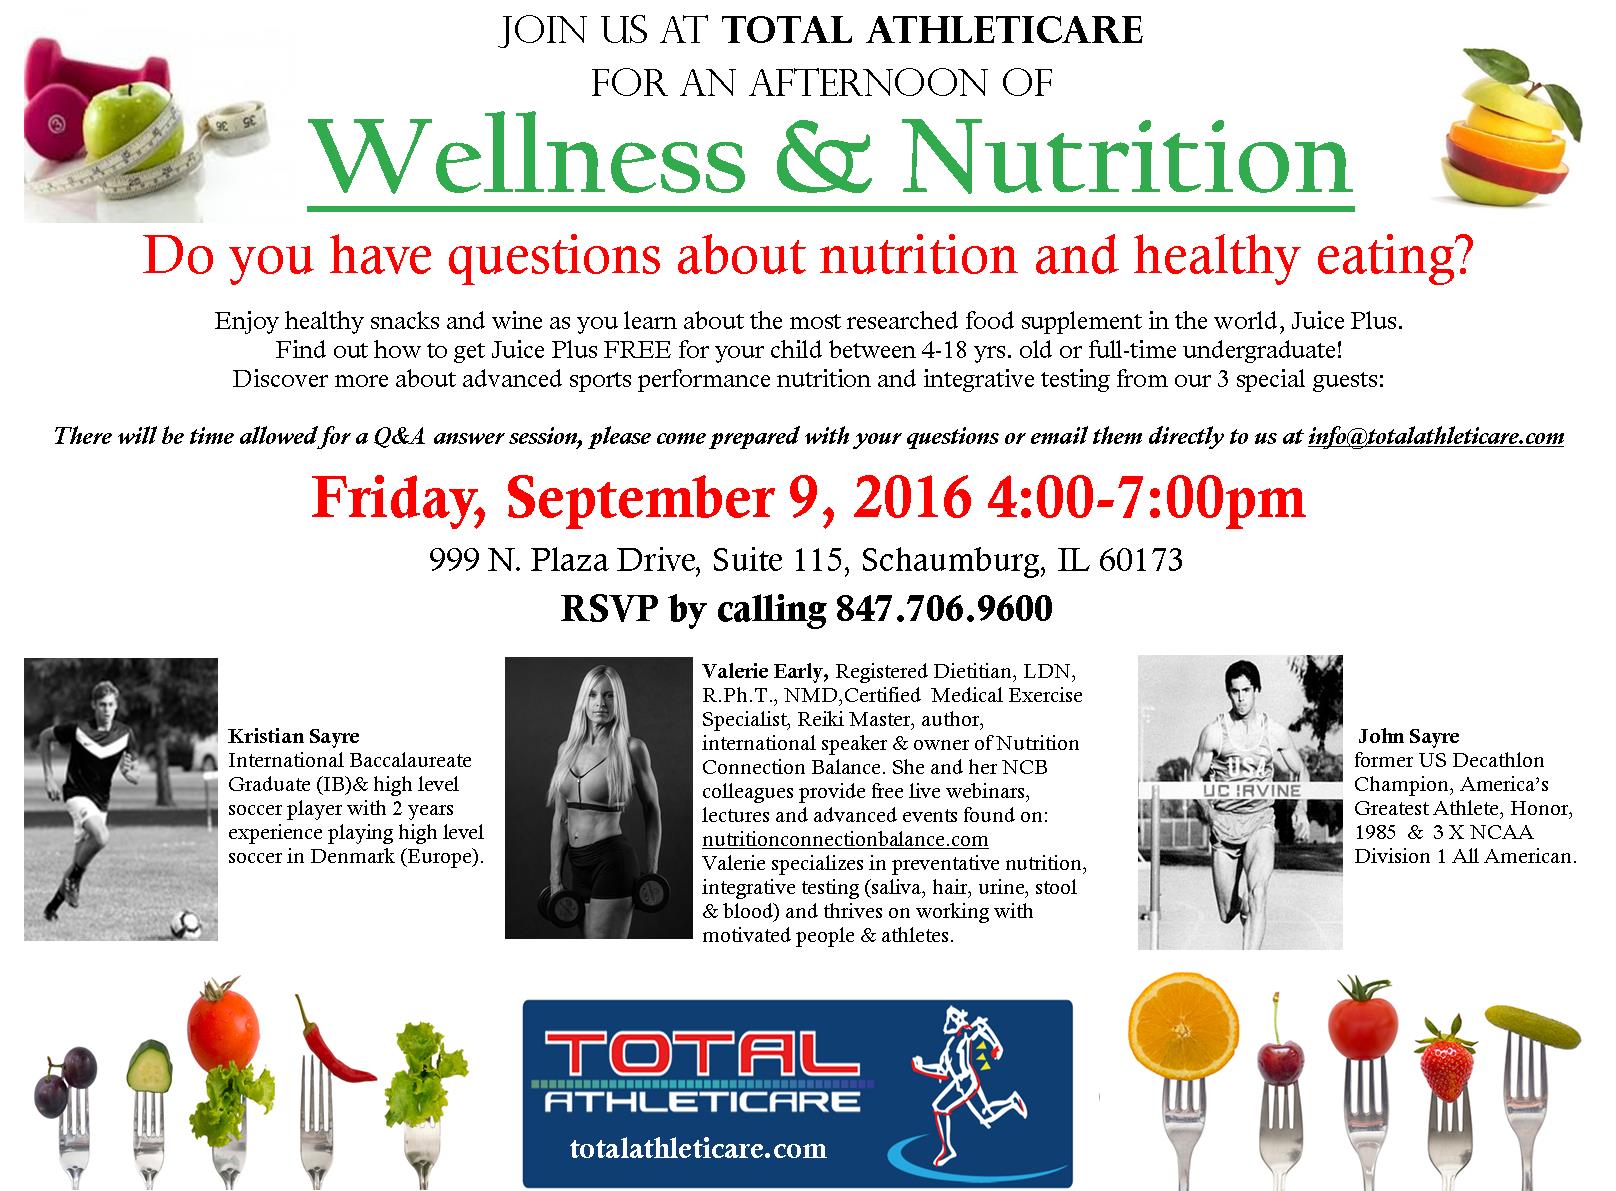 synergy nutrition and wellness